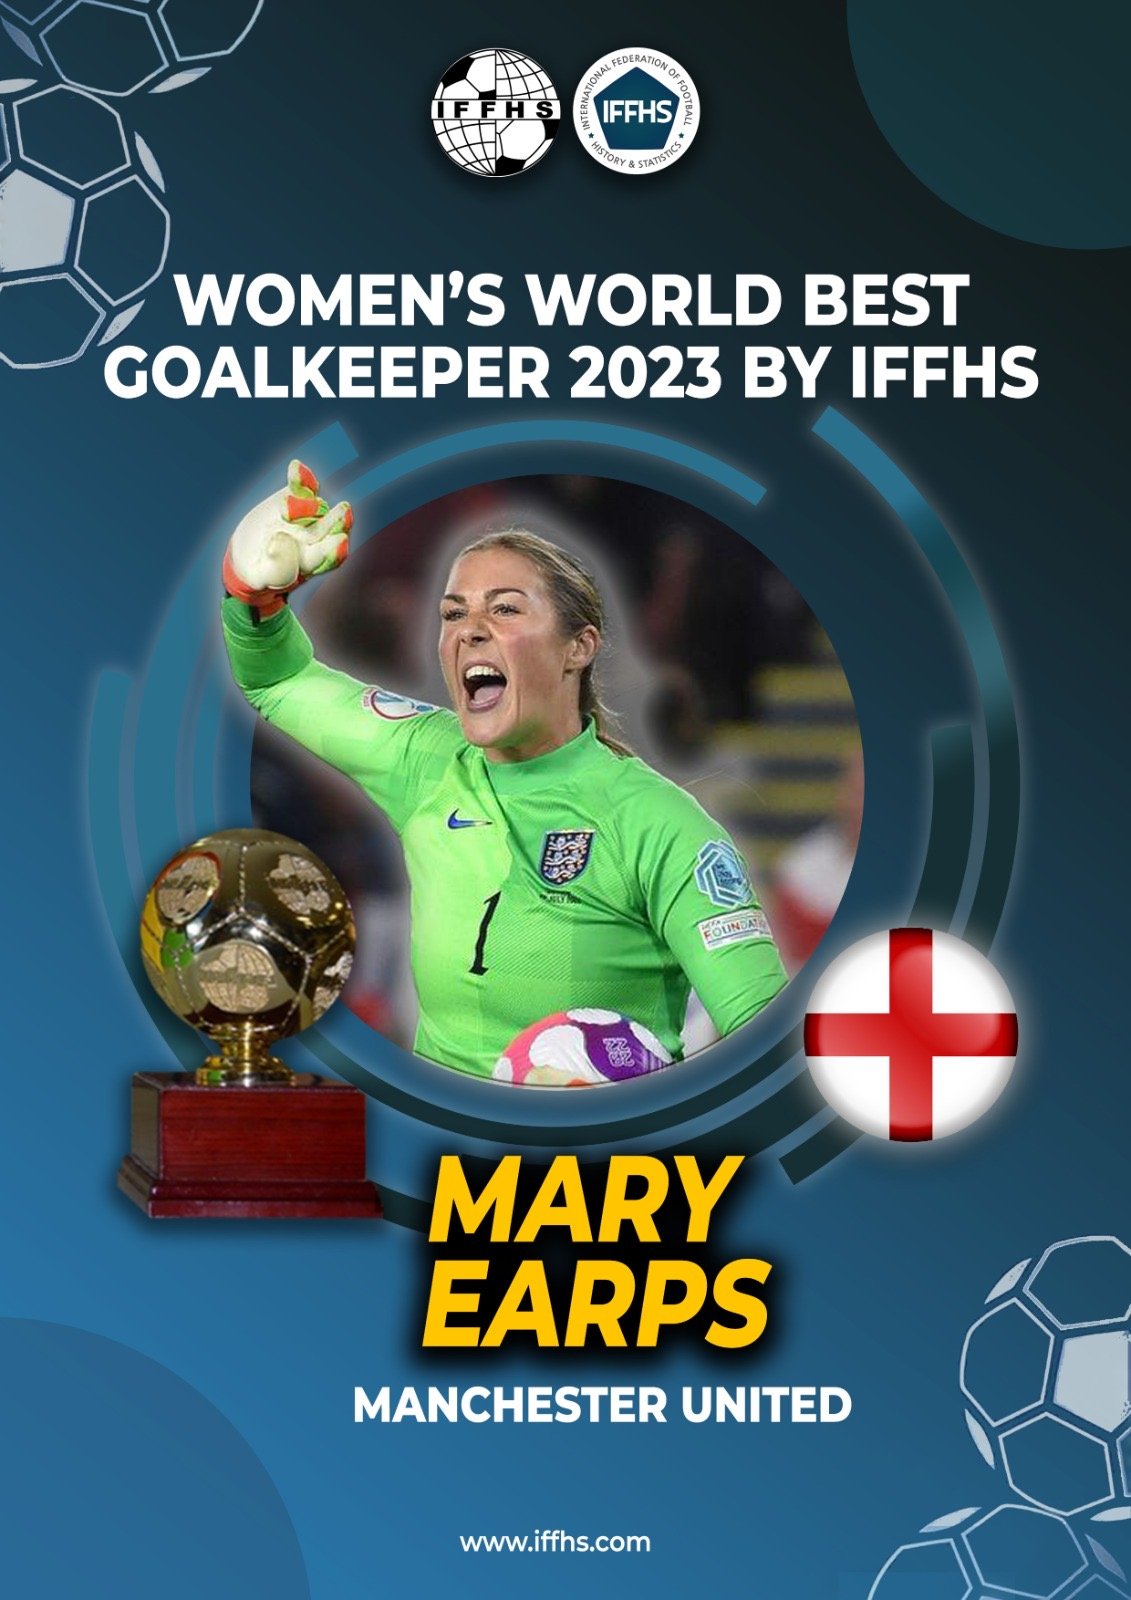 Mary Earps wins the Women's World Best Goalkeeper 2023 award. /IFFHS